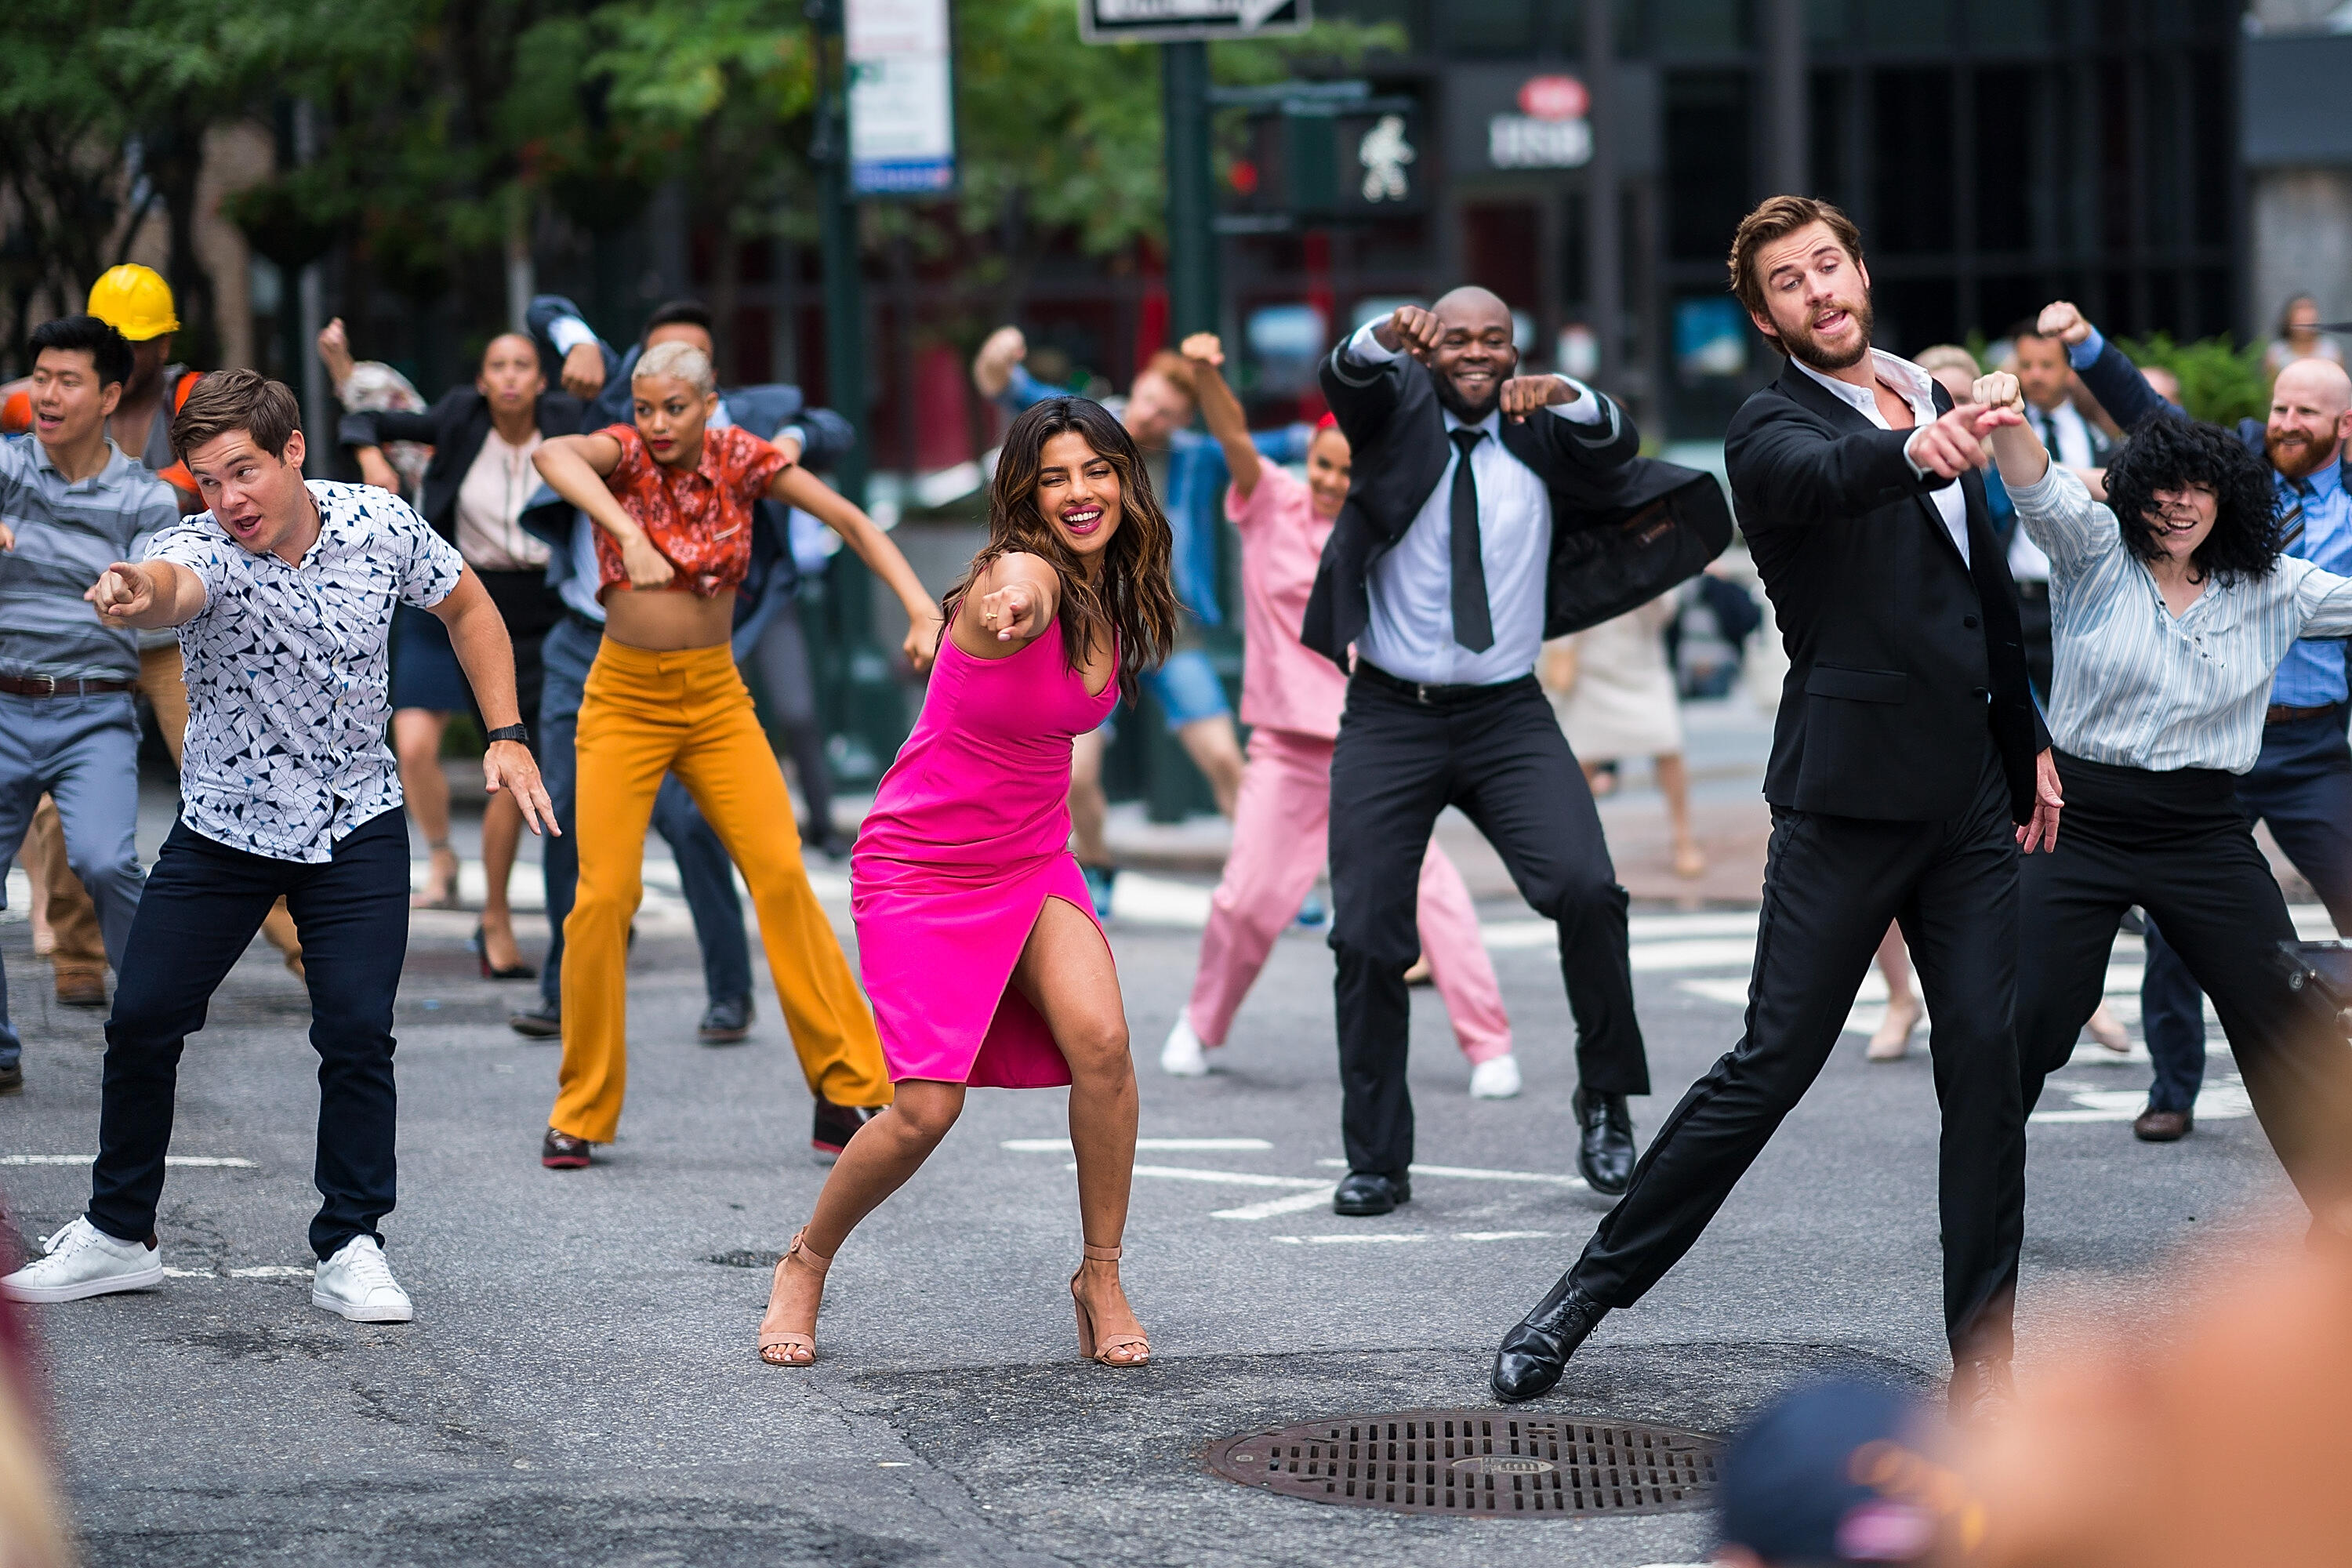 Liam Hemsworth, Rebel Wilson, and Priyanka Chopra Dance In The Street